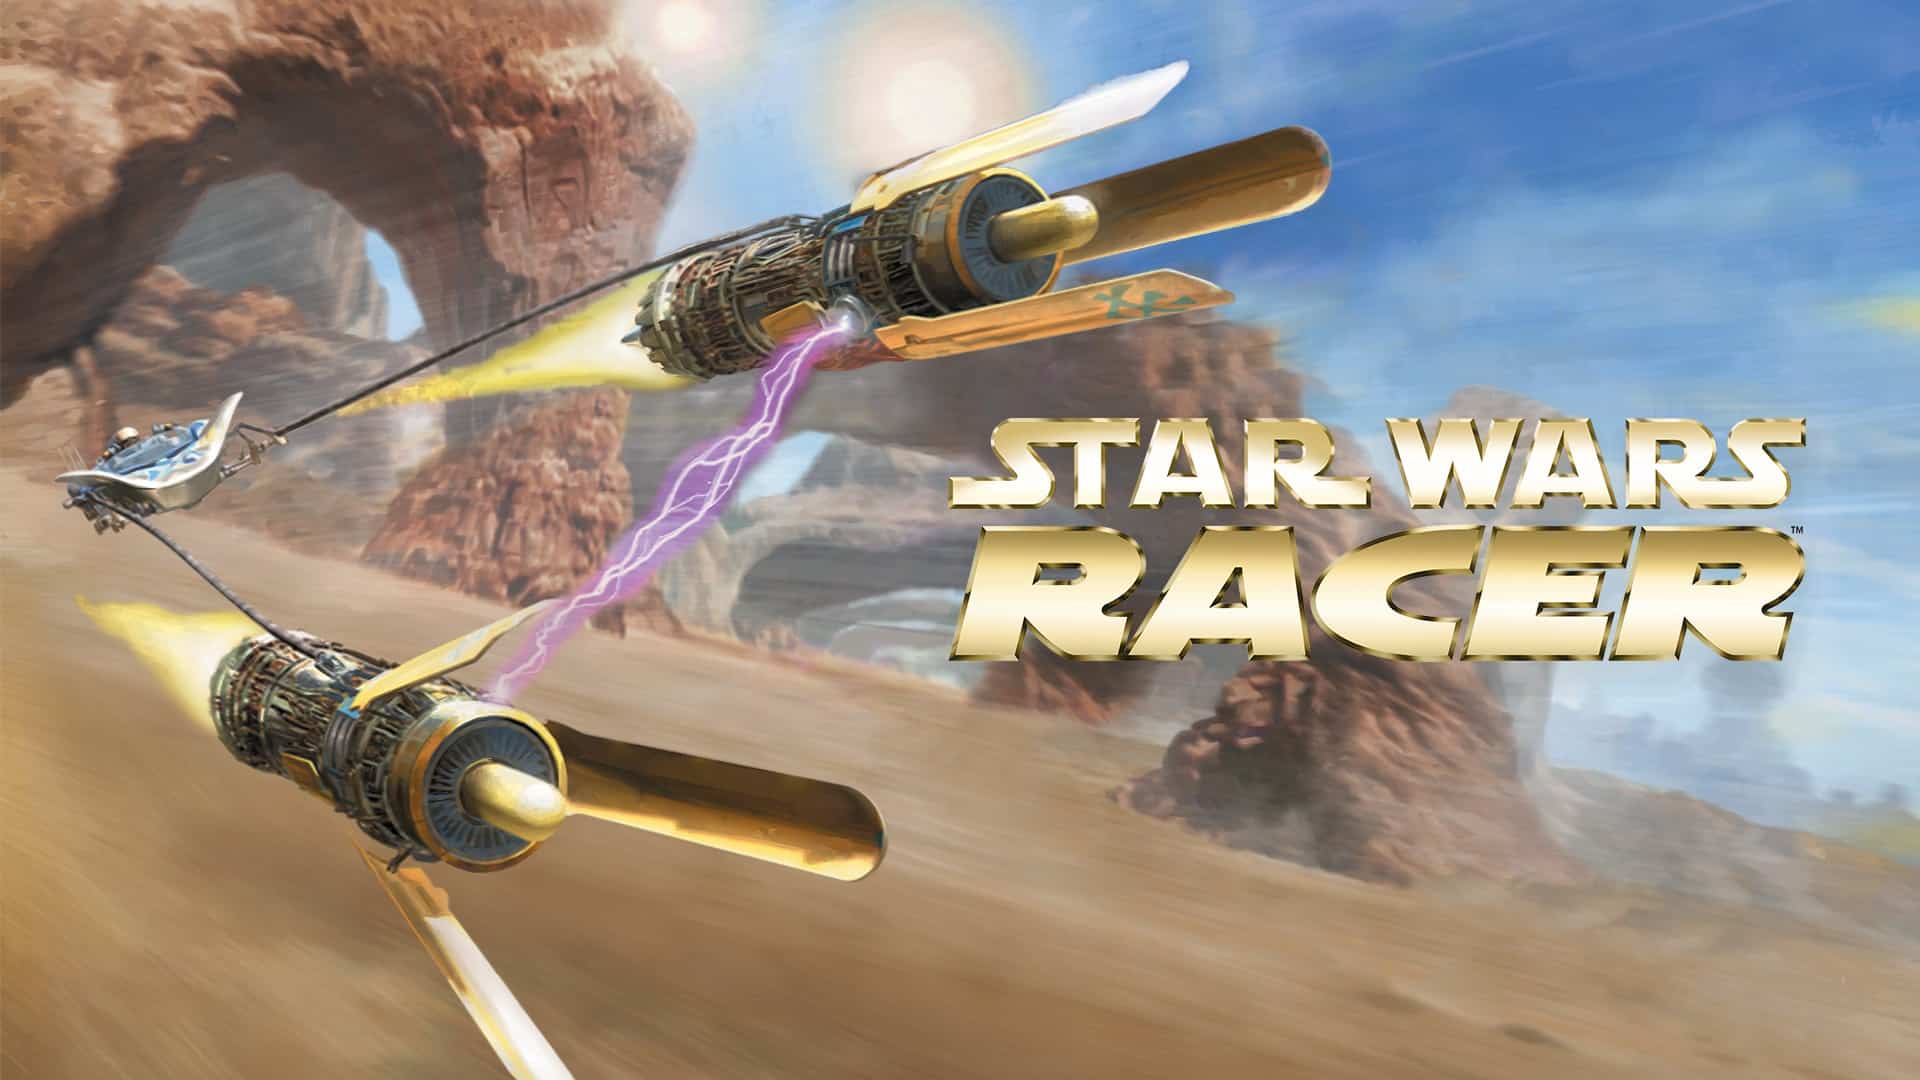 Star Wars Episode I: Racer player count stats